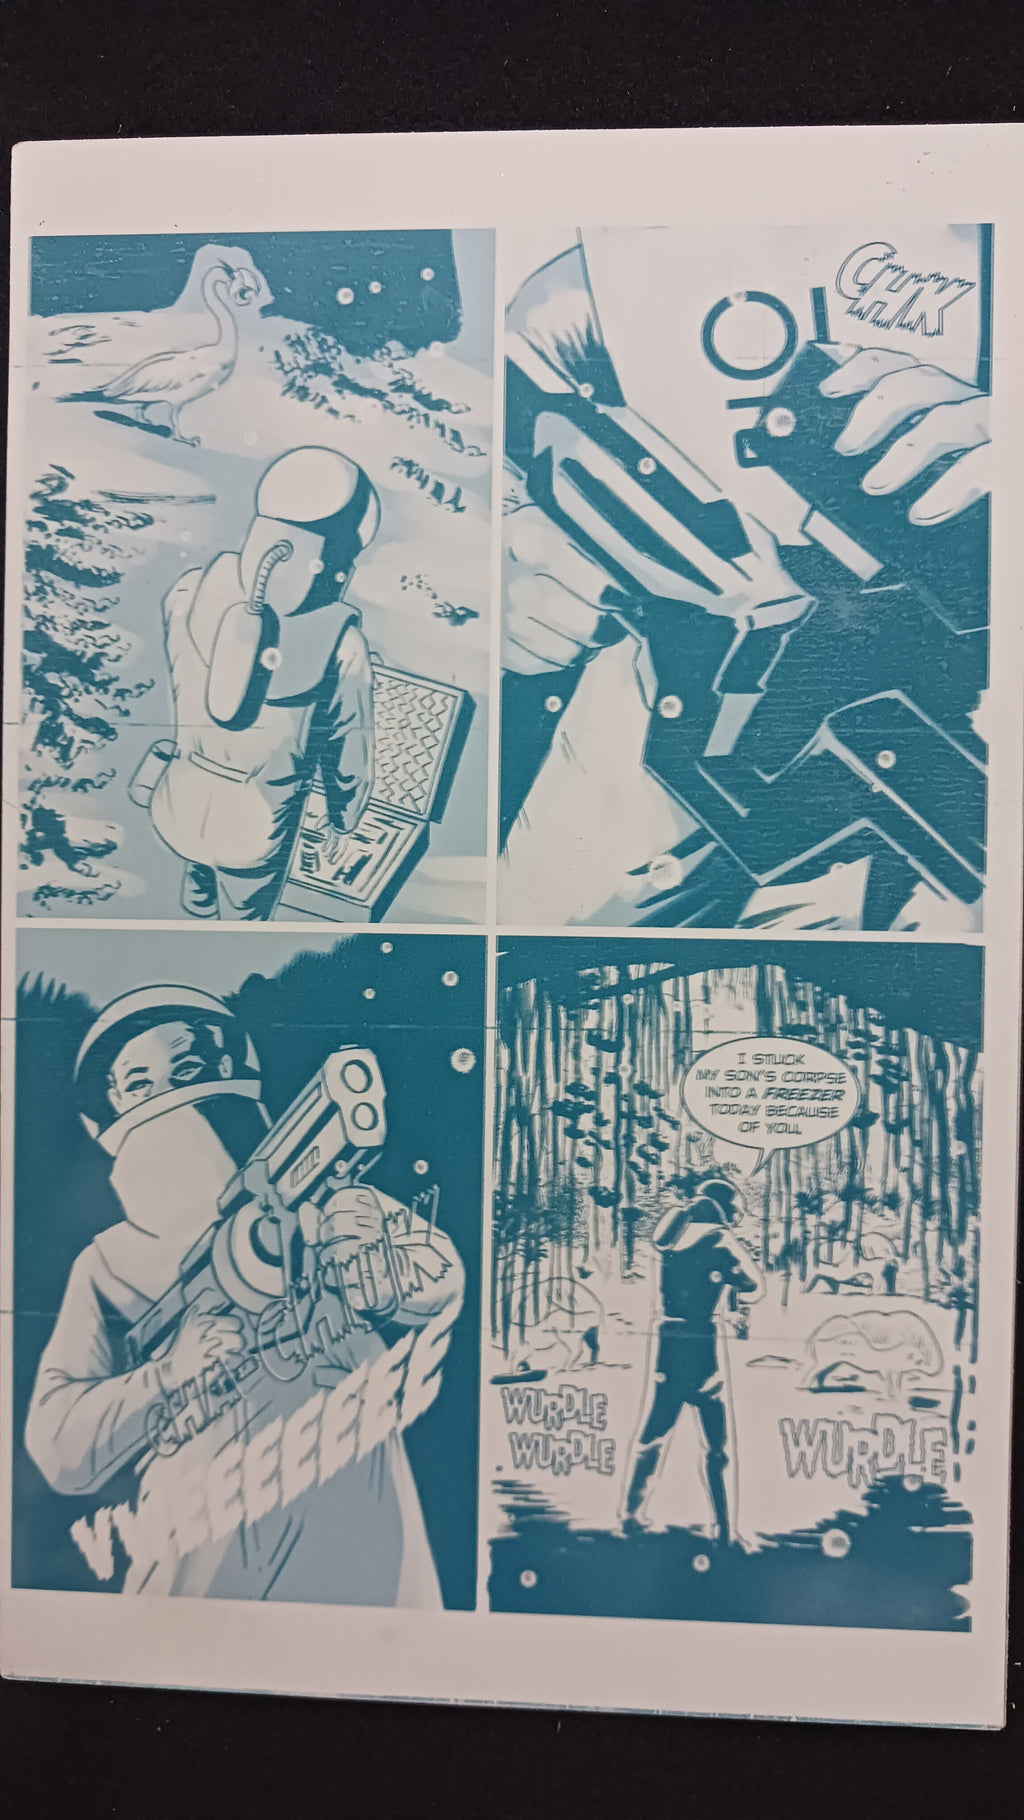 Ghost Planet #1 - Page 21 - PRESSWORKS - Comic Art - Printer Plate - Cyan